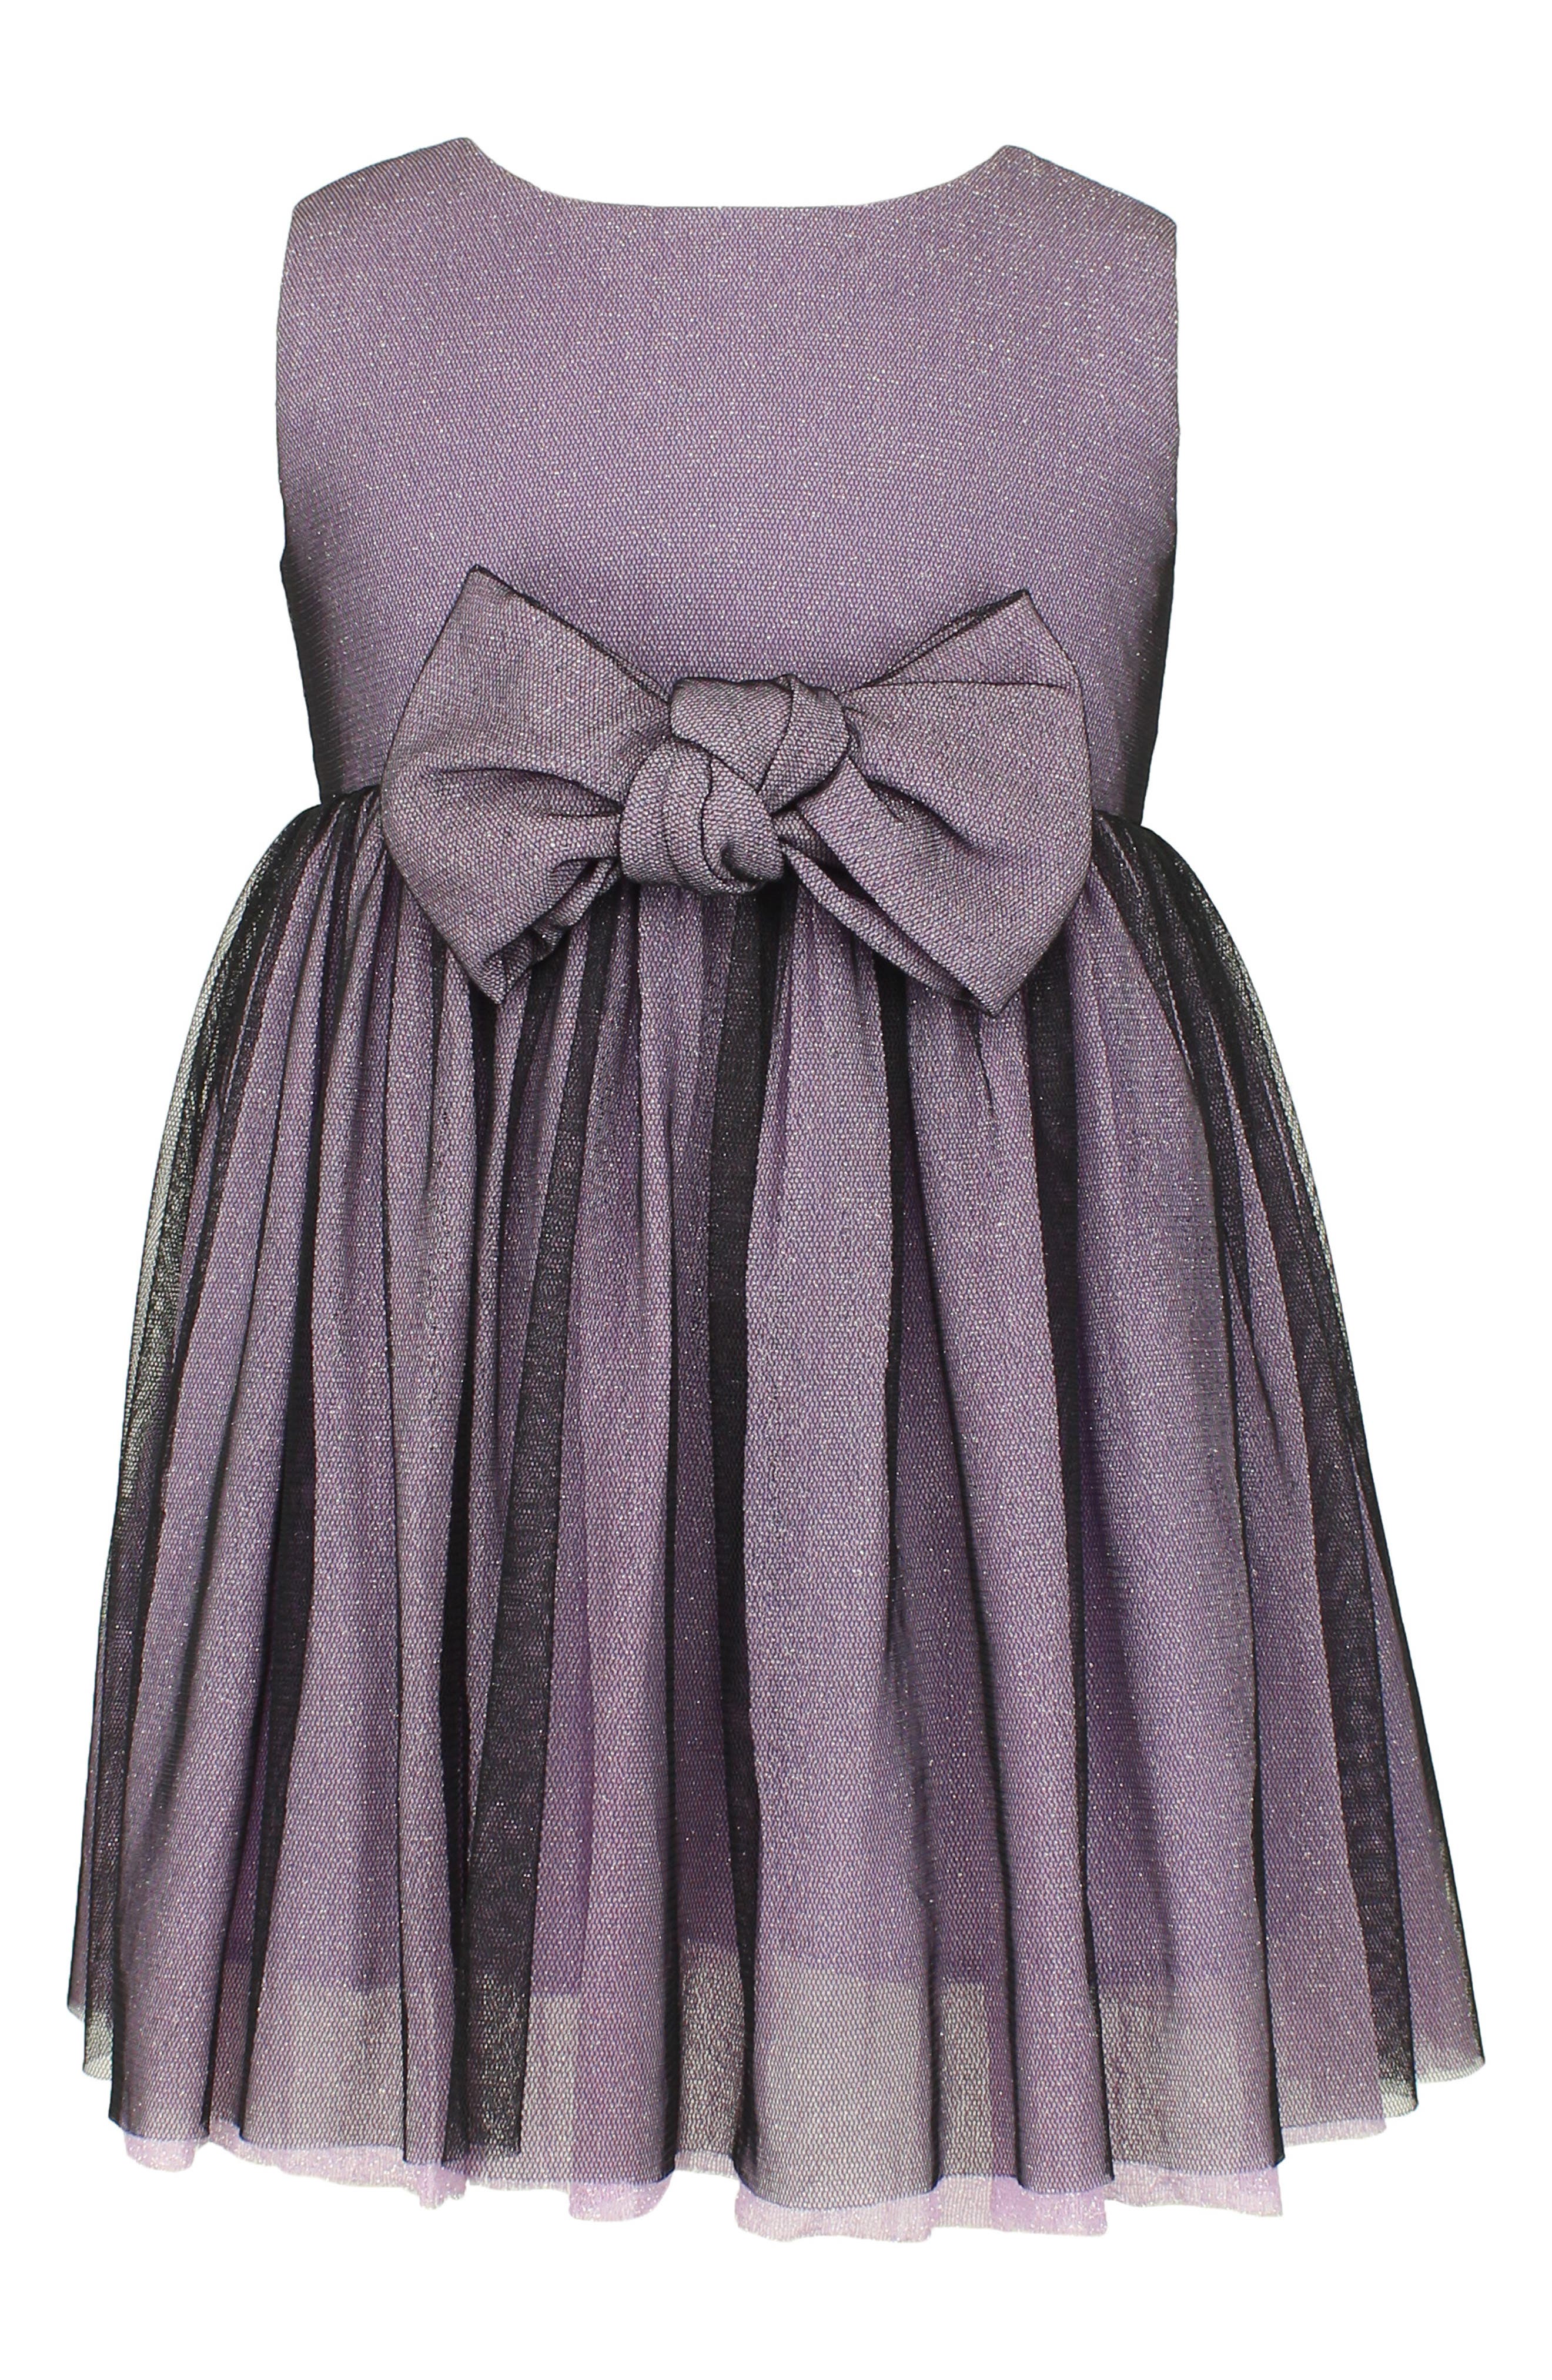 Toddler\u2019s Ruffled Bodice Dress With Gray Velvet Skirt And PurplePink Bow